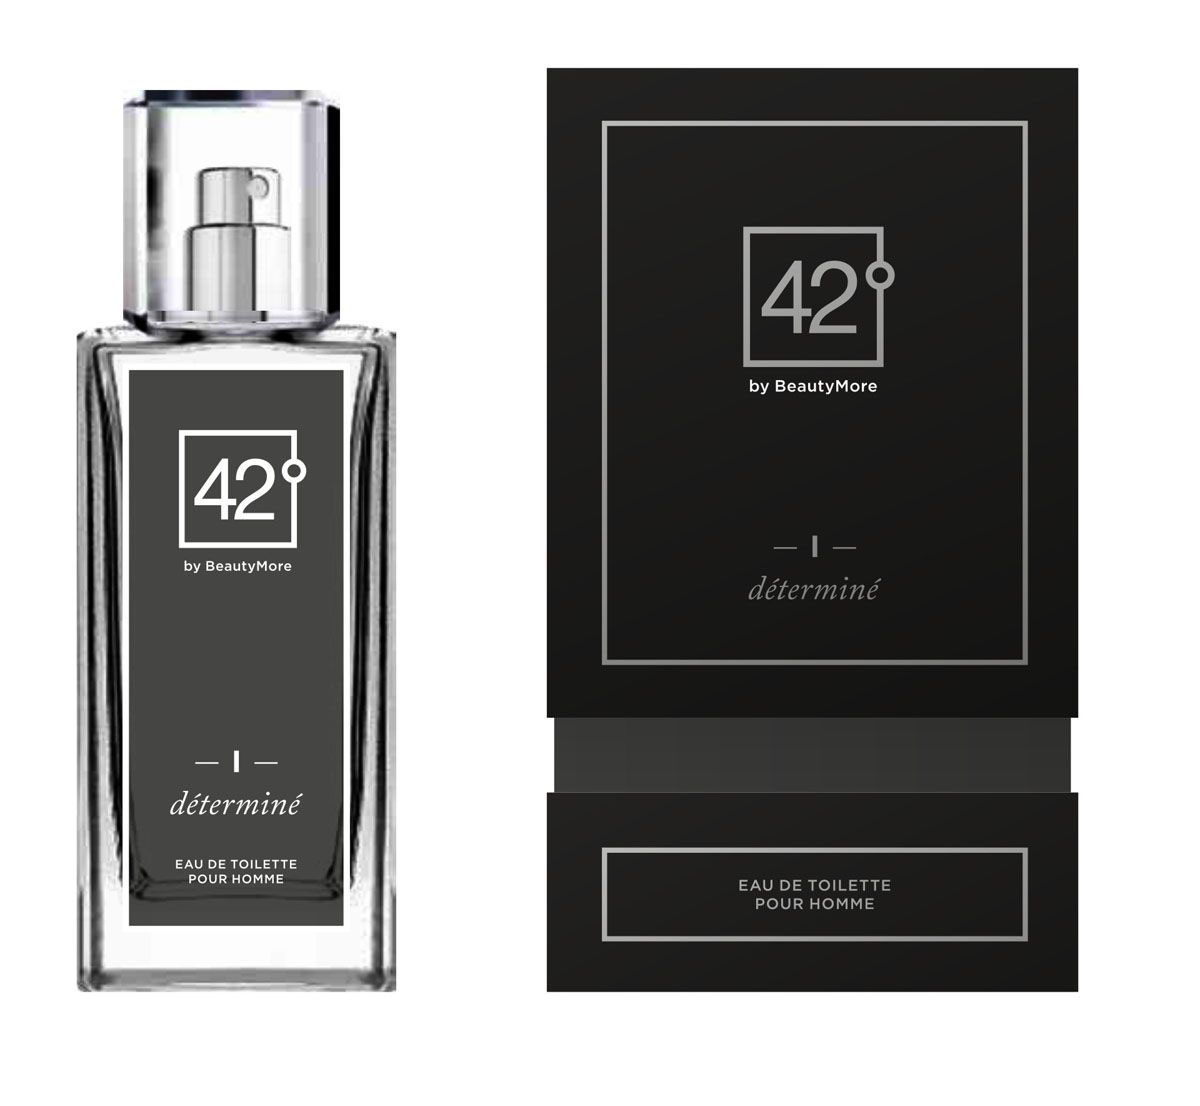 Парфюм мужские 1. Fragrance 42 imperieux. Парфюм 42 by Beauty more. 42° by Beauty more II Conquerant. Духи 42 градуса мужские.